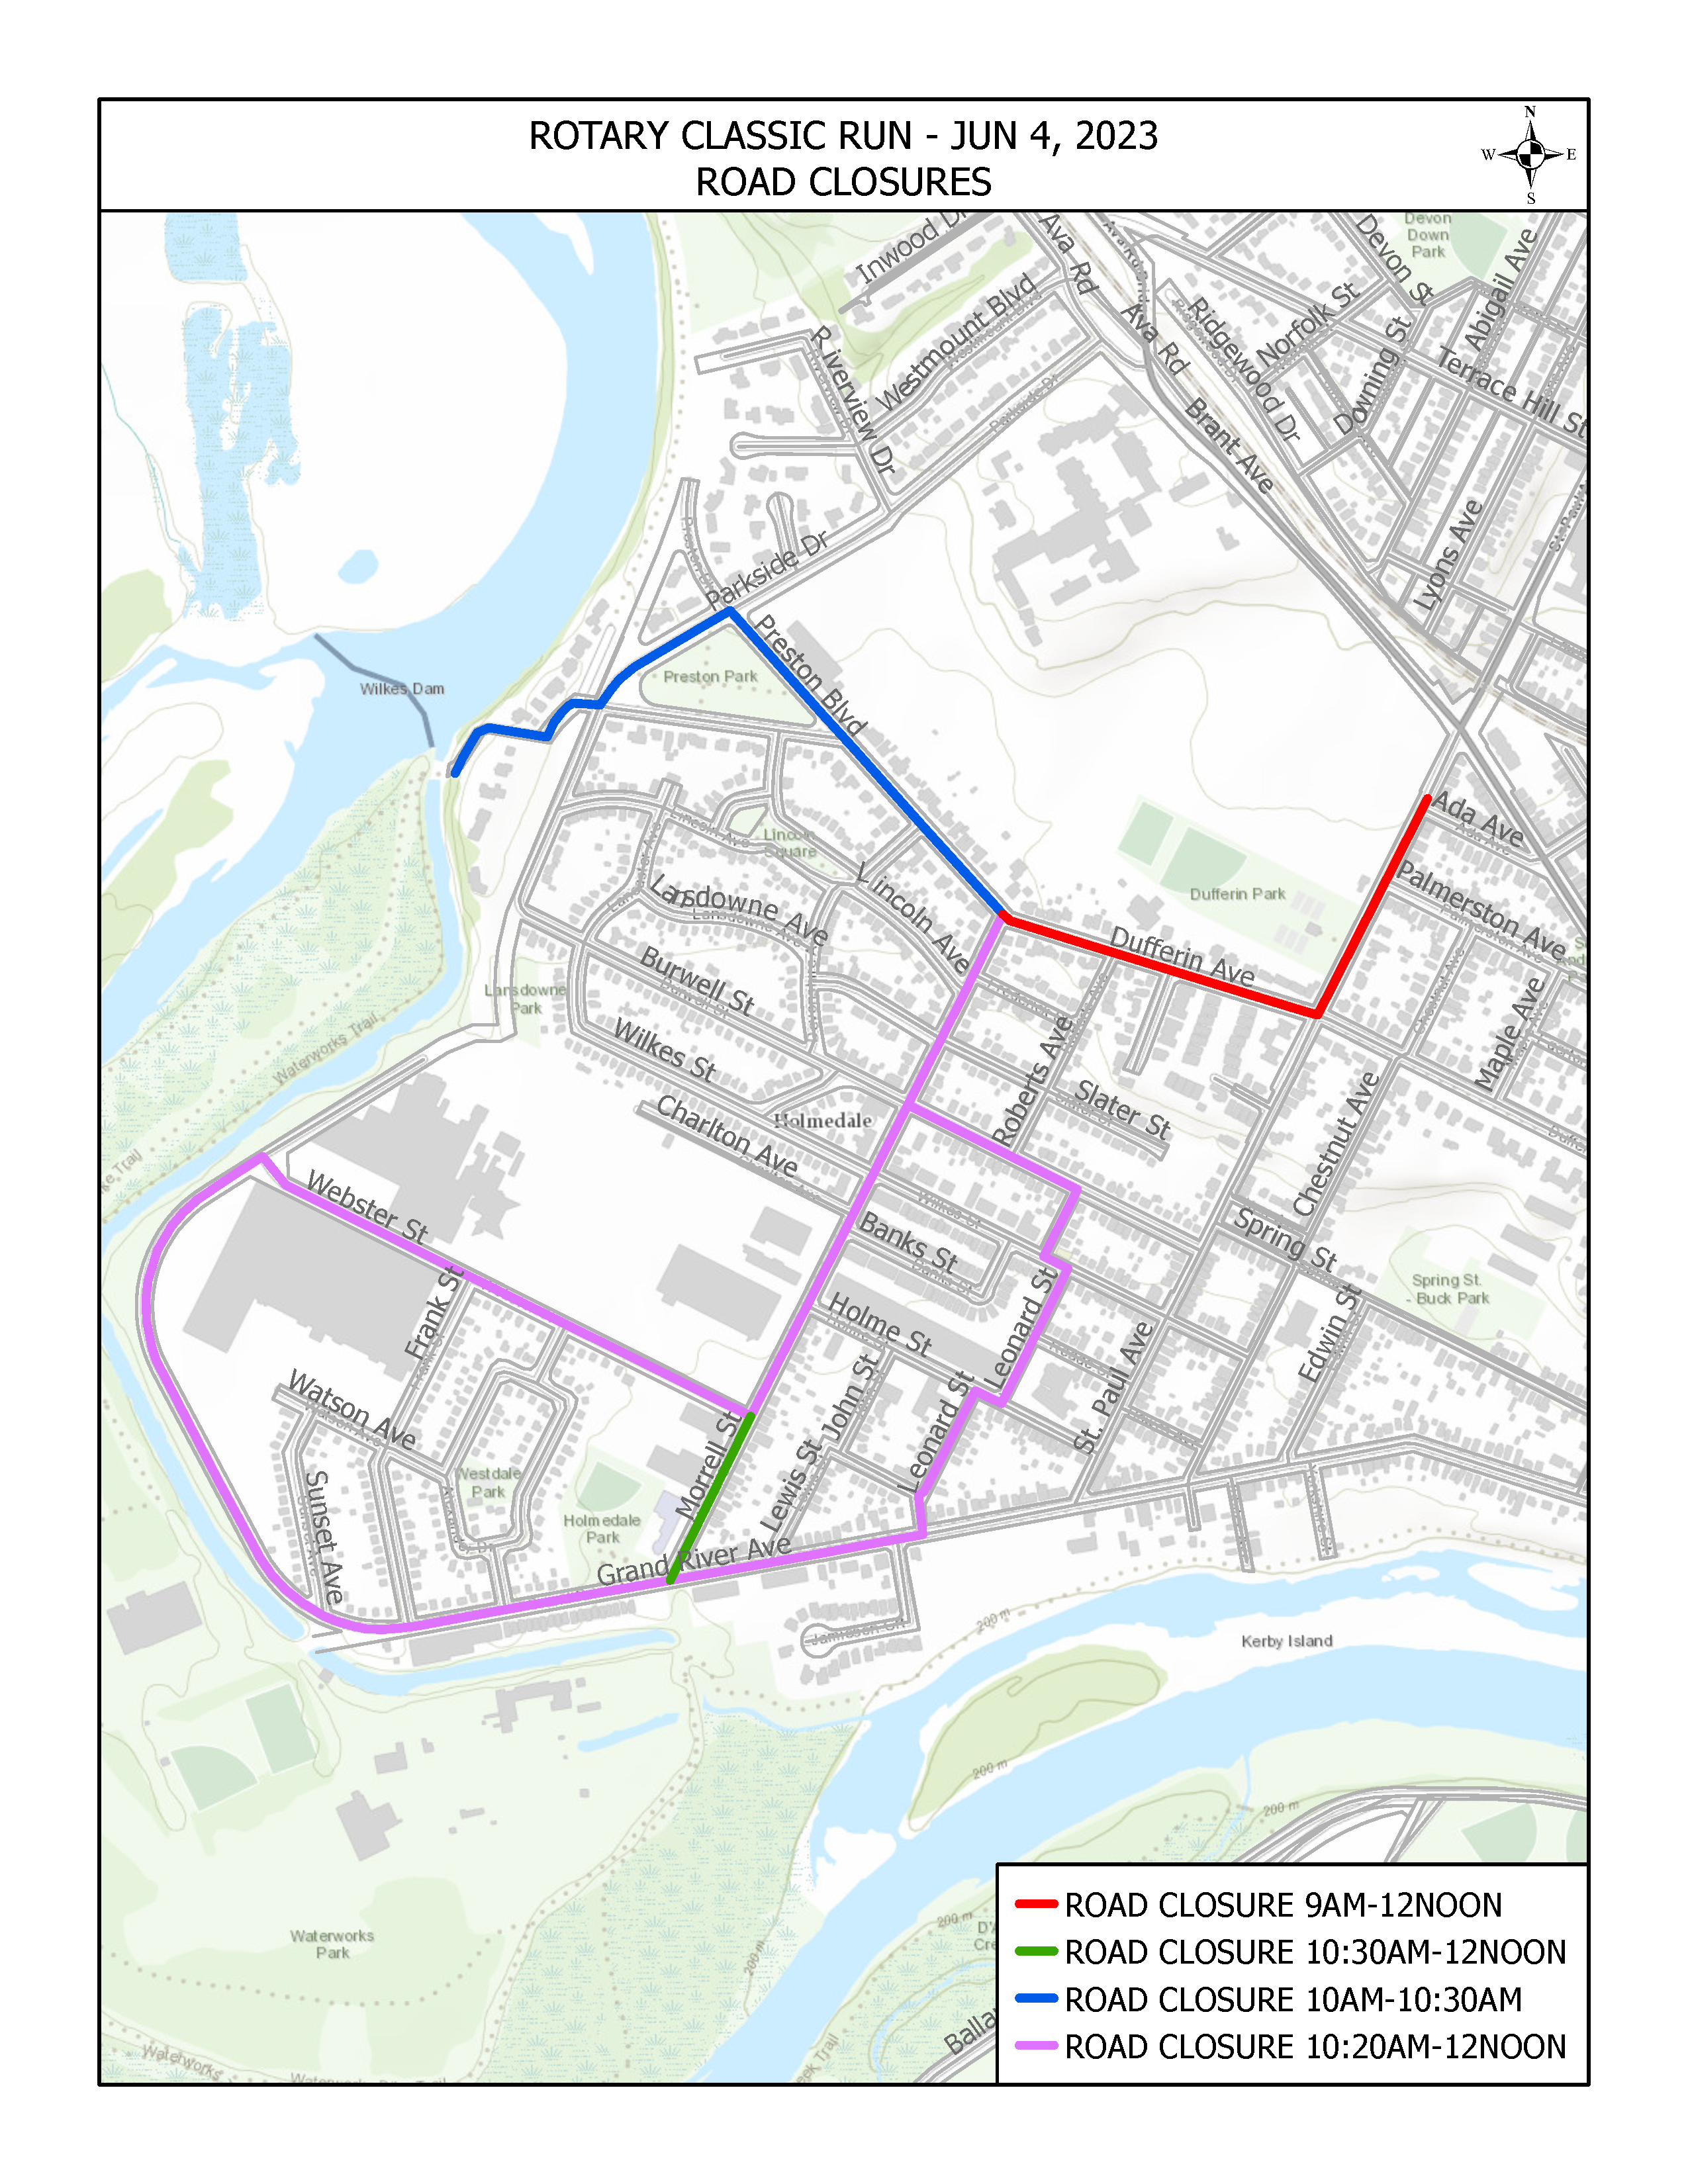 Rotary Brantford Classic Run 2023 temporary street closures map